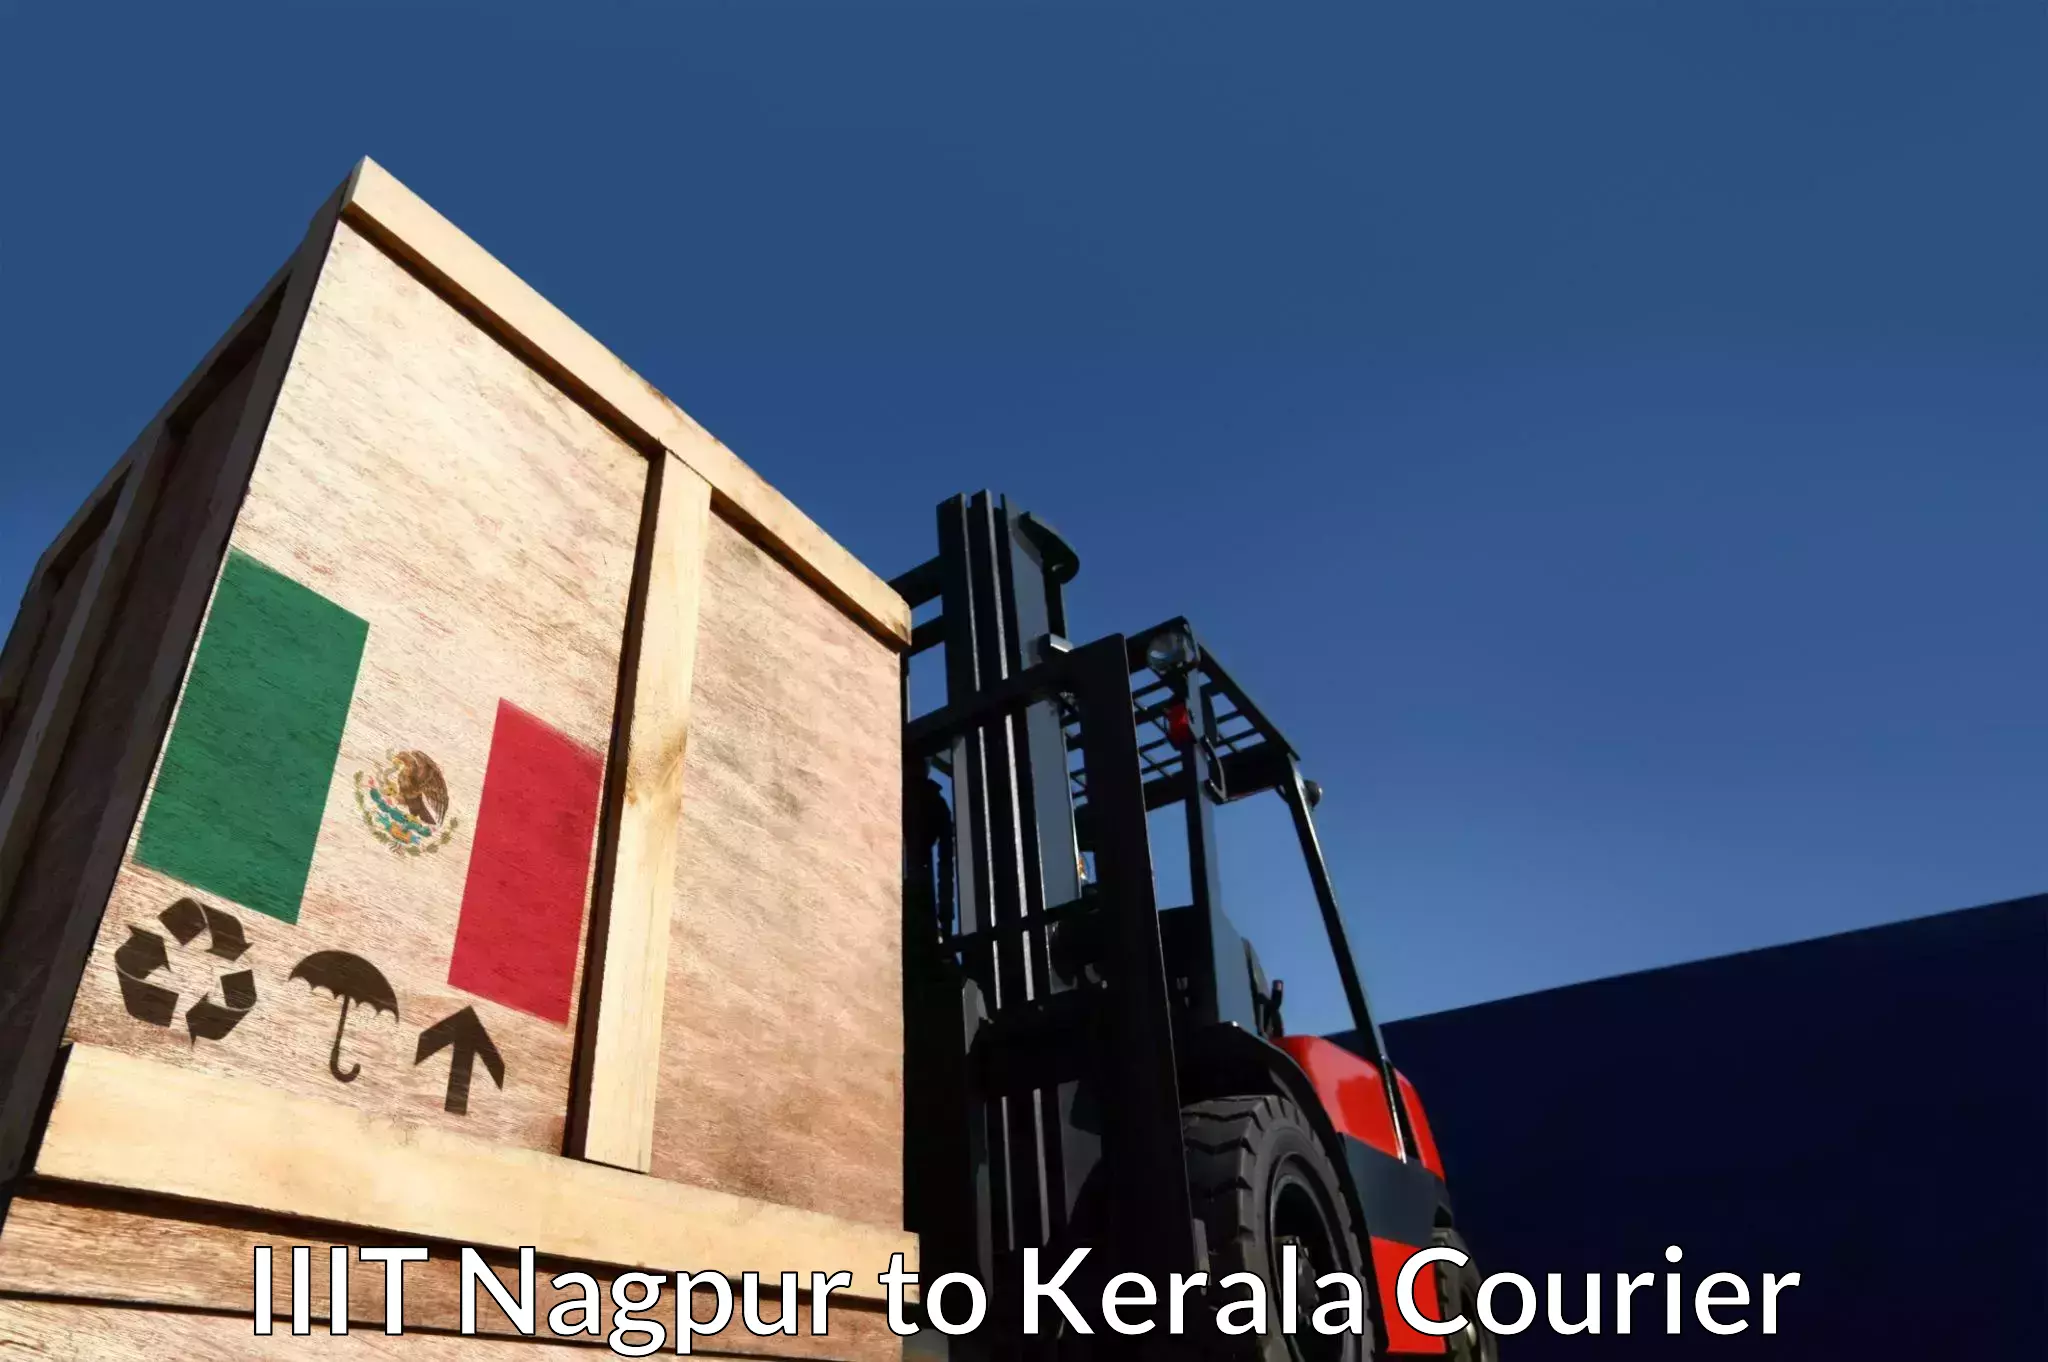 Courier service comparison IIIT Nagpur to Shoranur